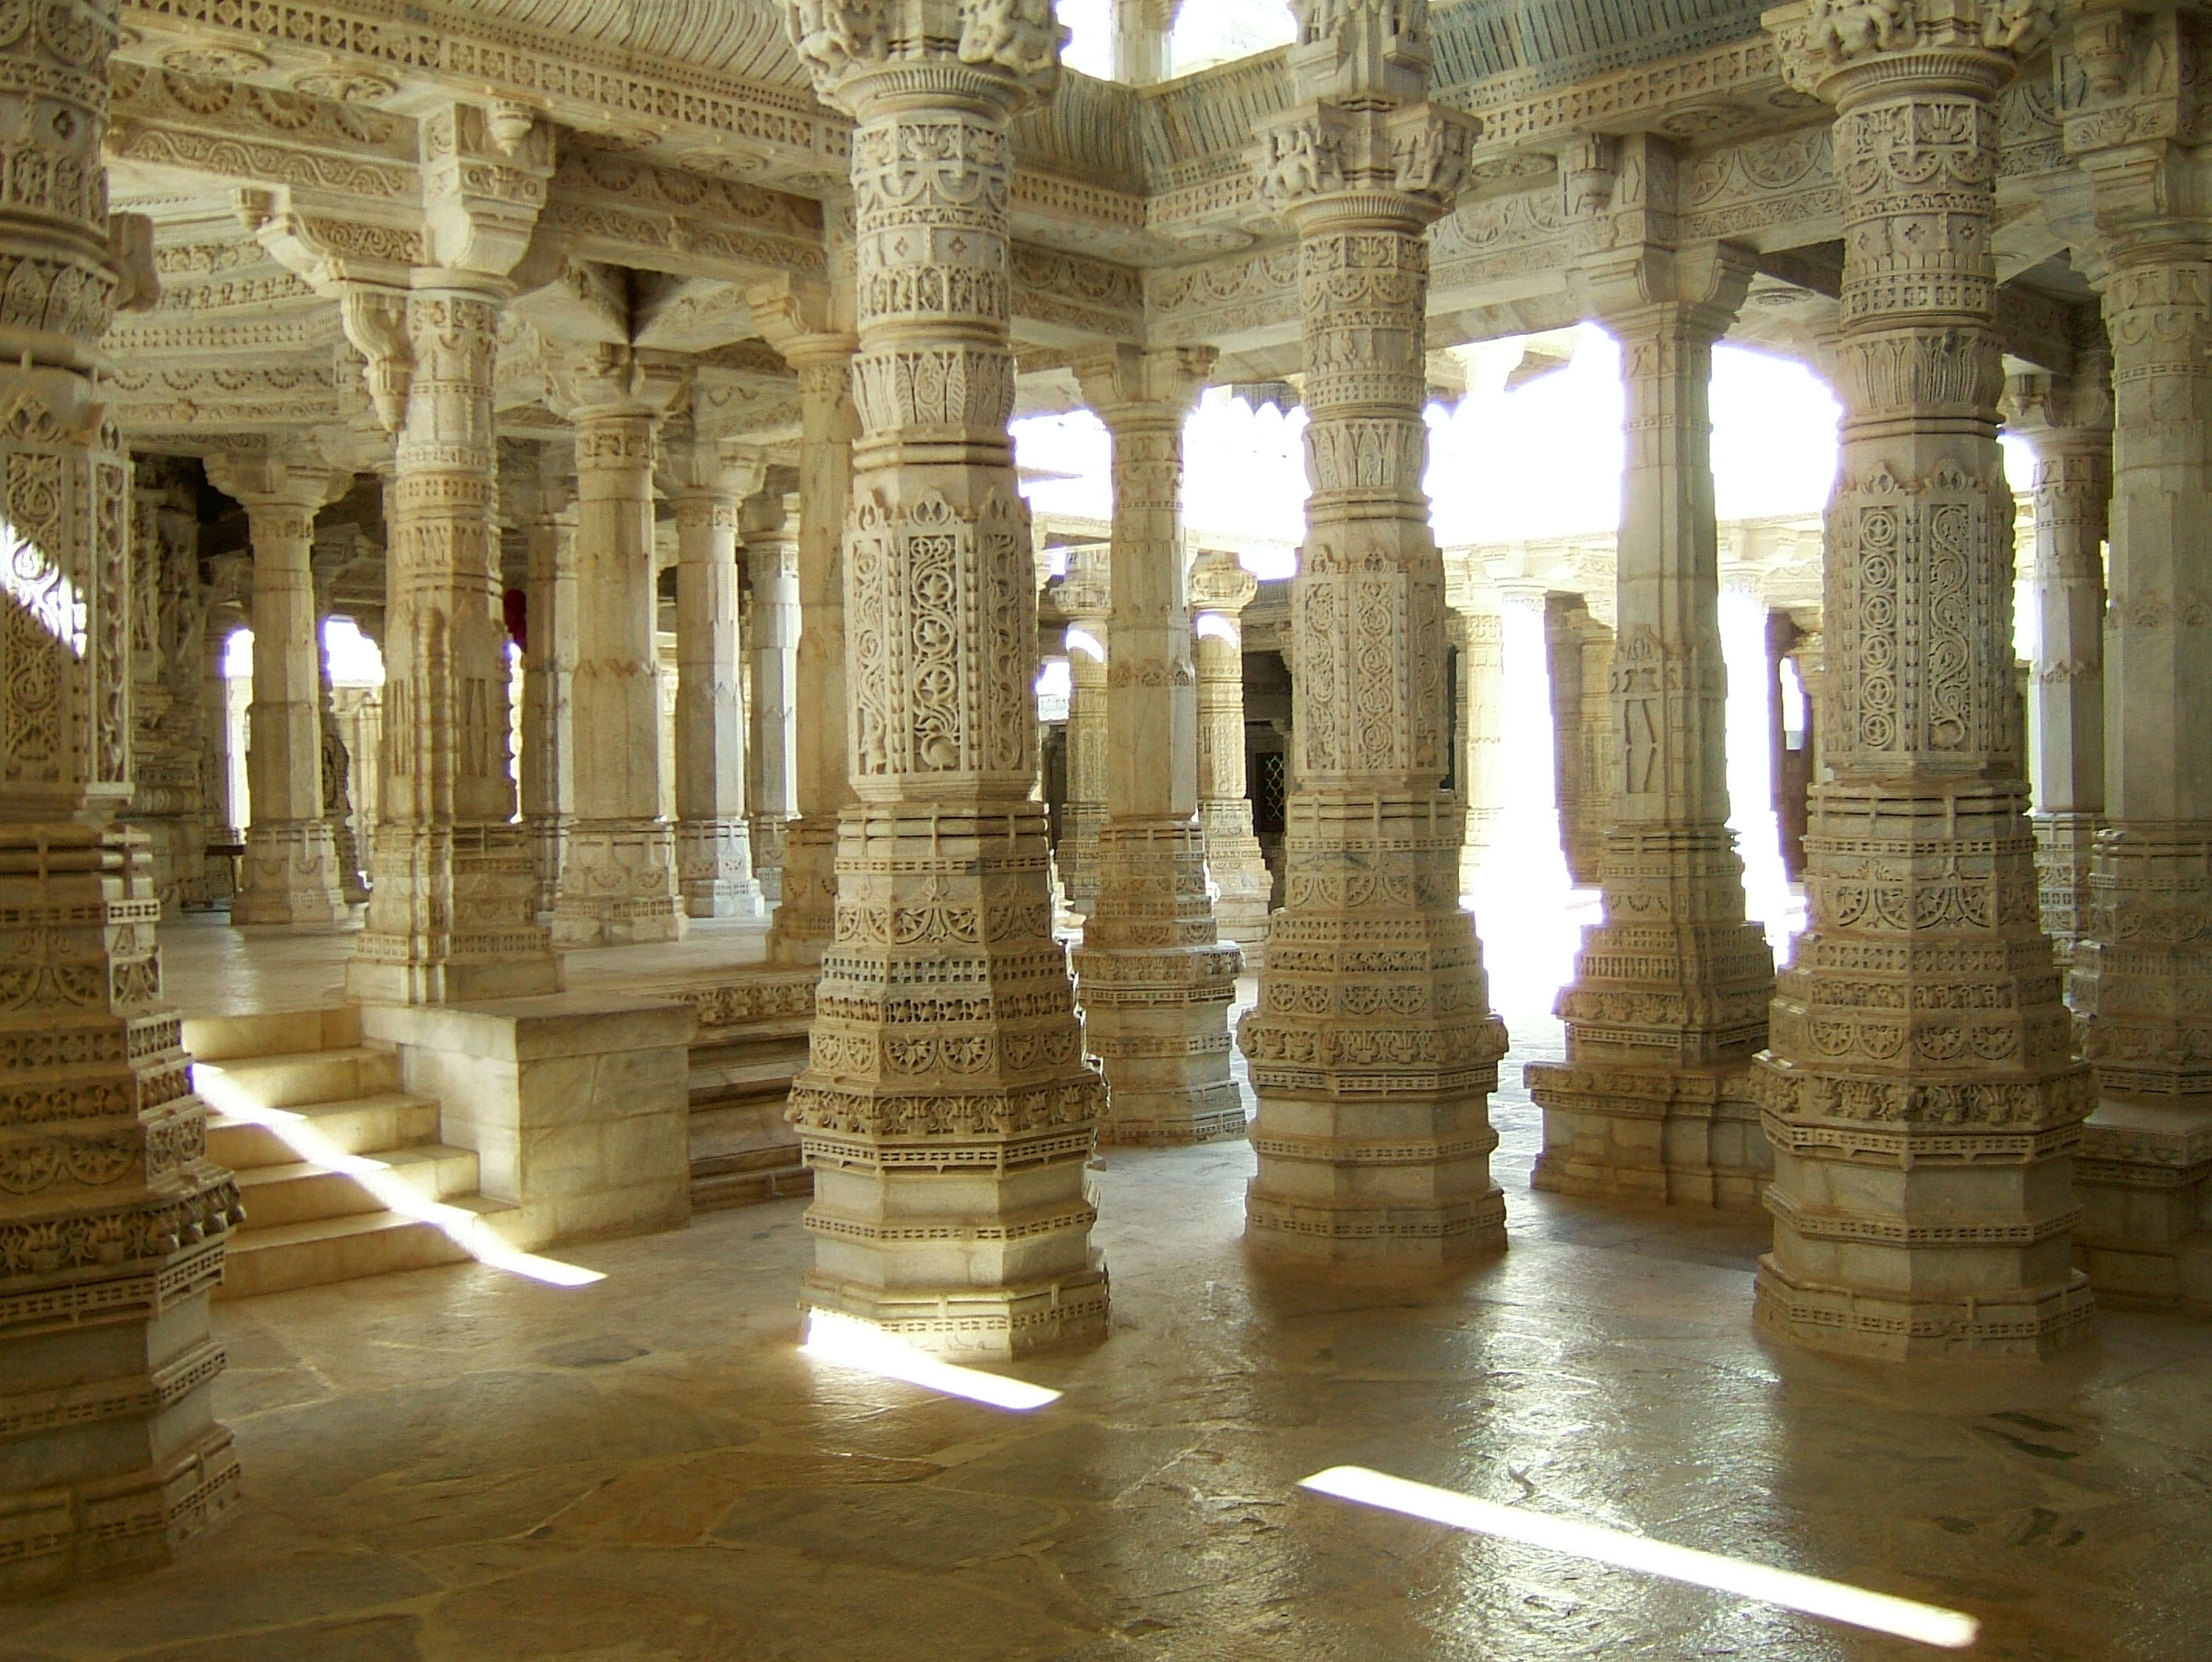 Ranakpur Jain Marble Temple pillars Frescoes India Apr 2004 03